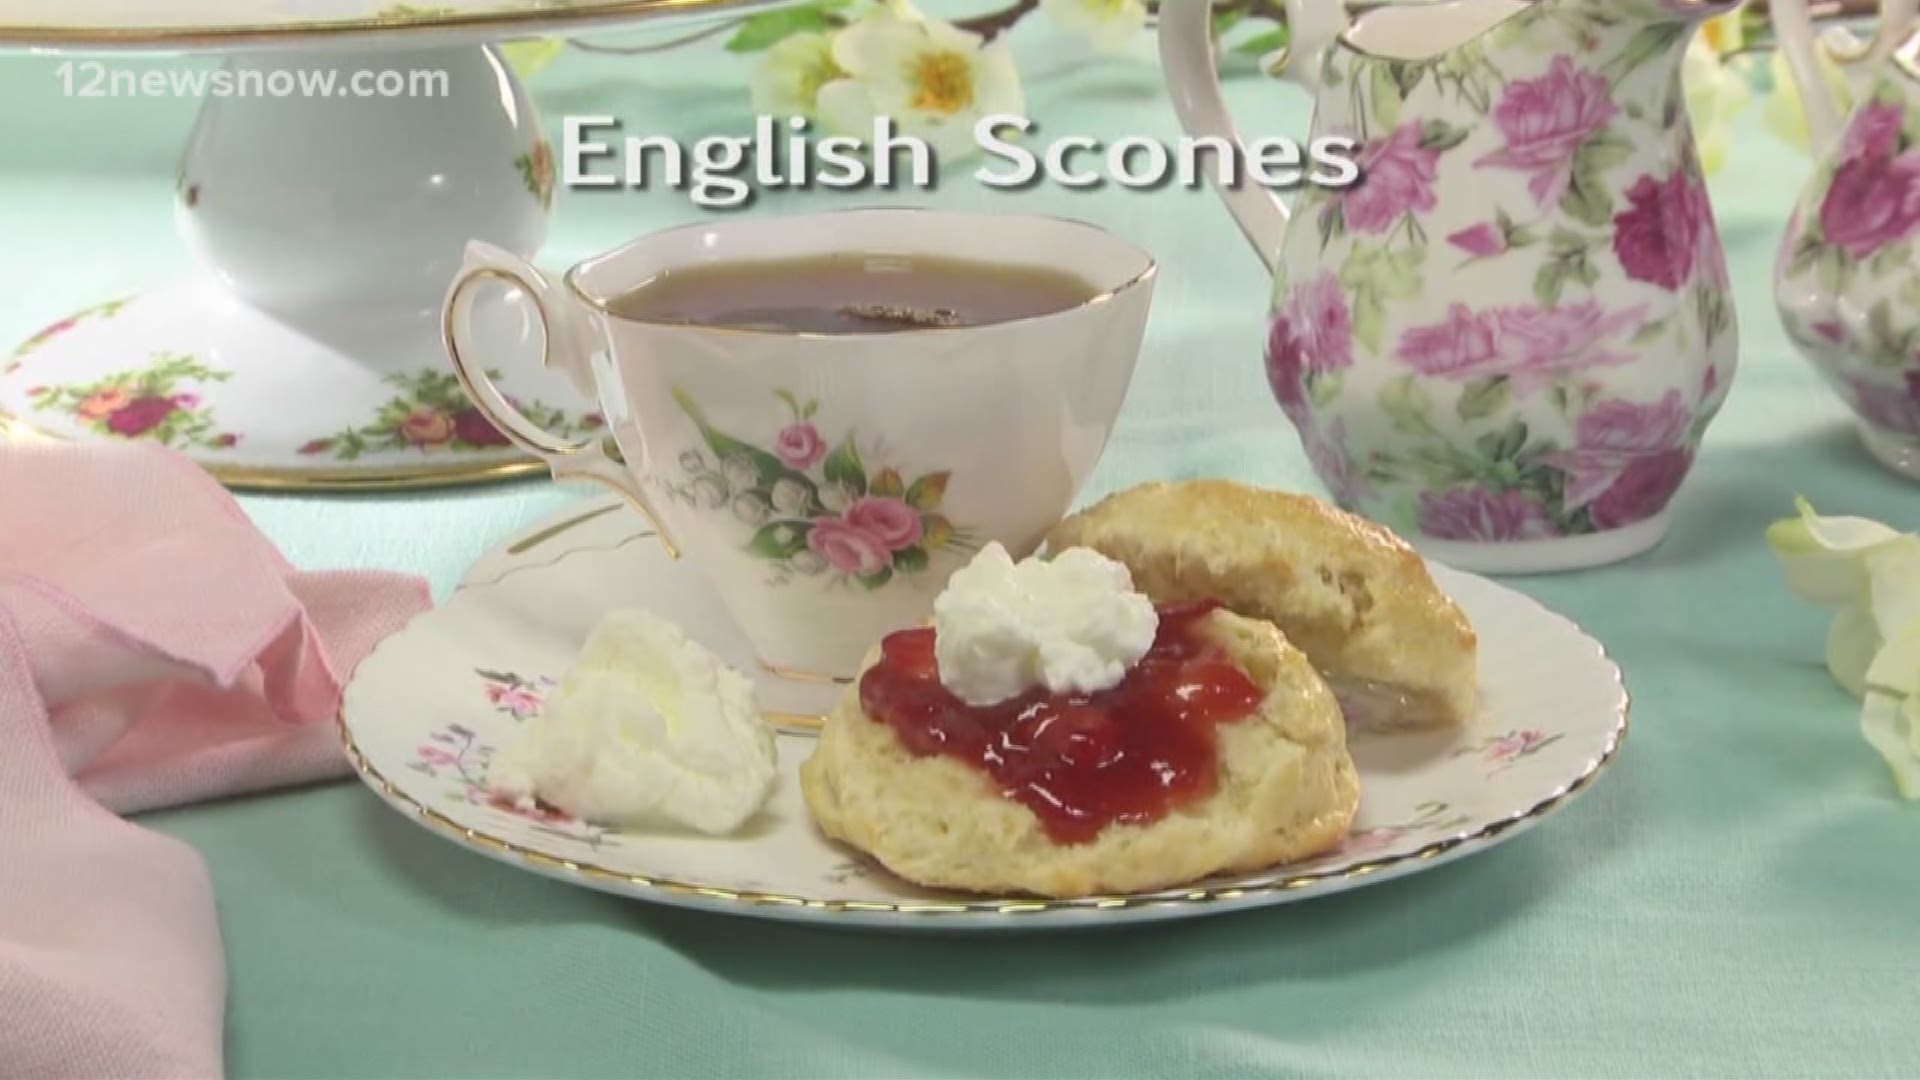 Mr. Food makes English scones